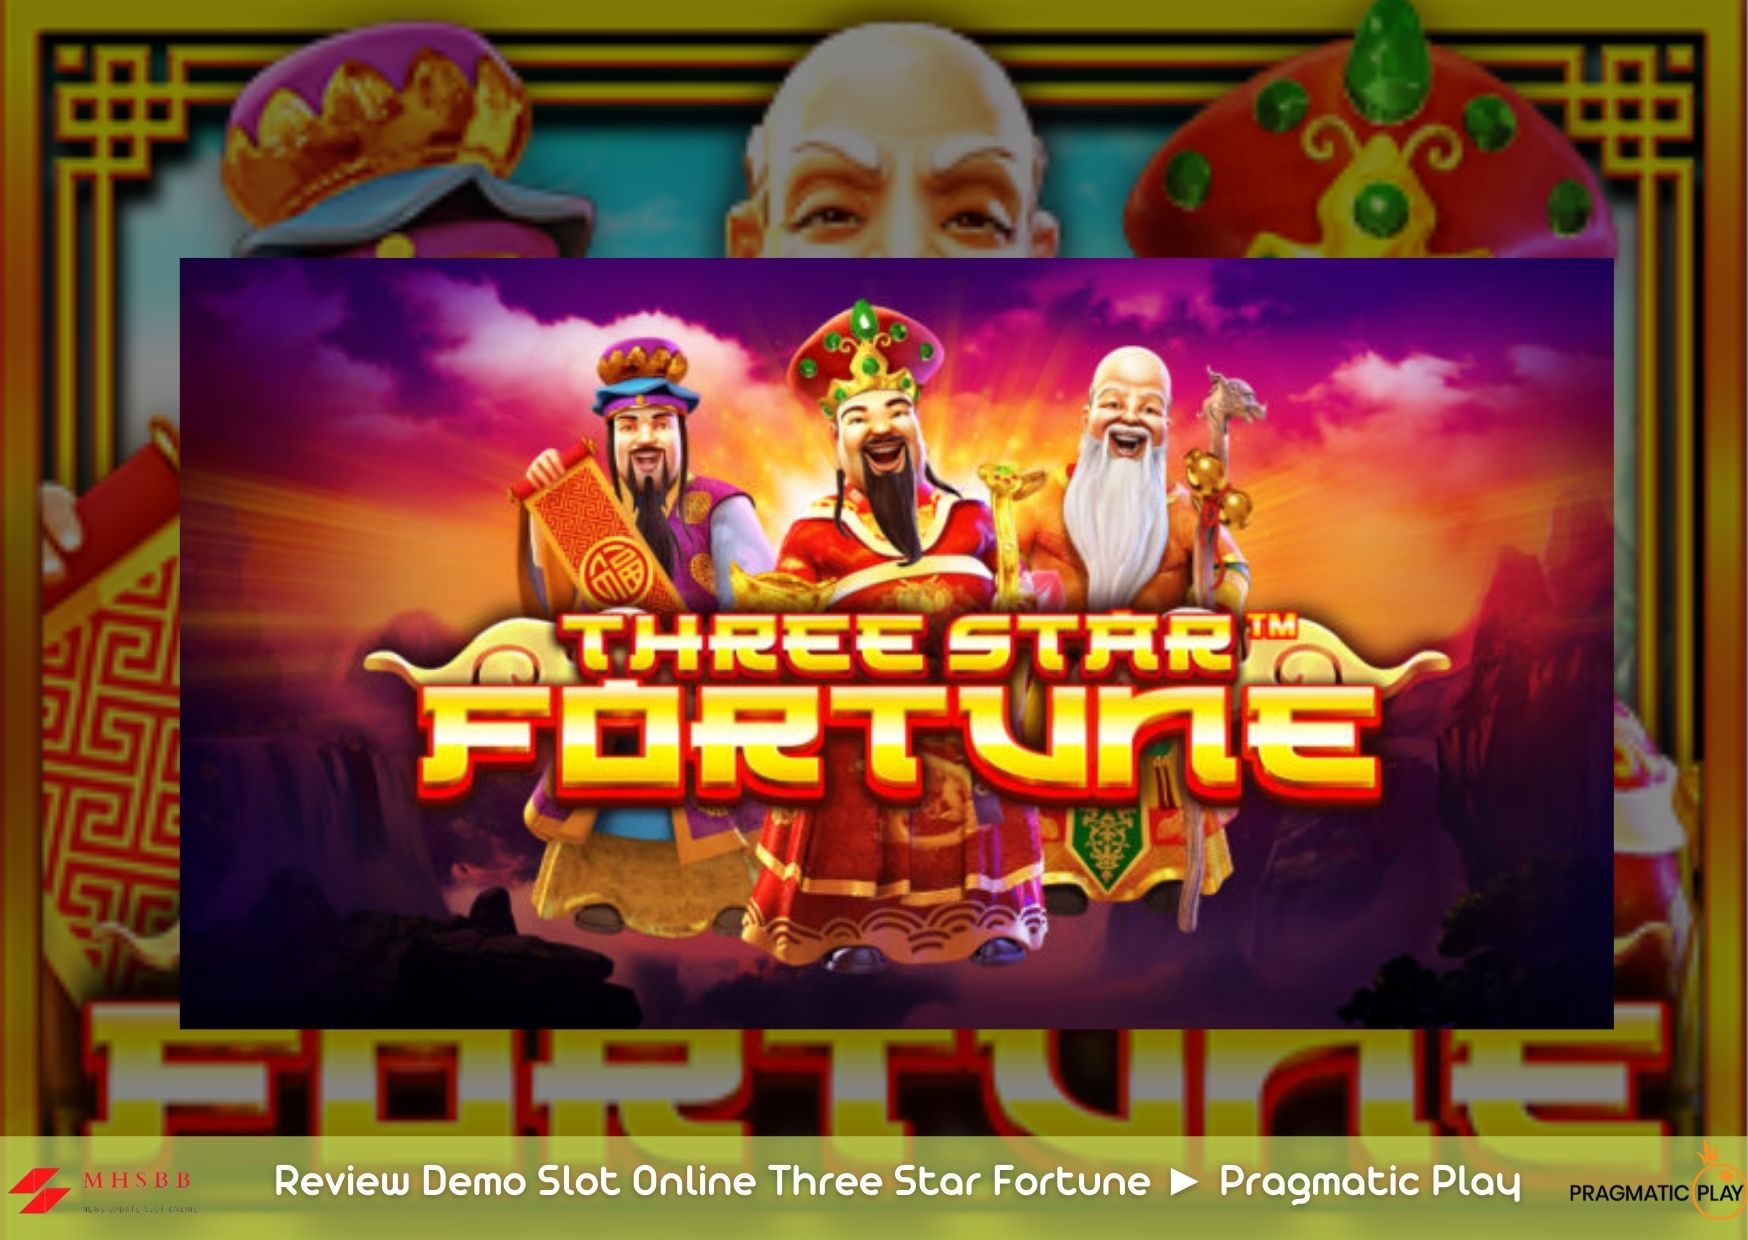 Review Demo Slot Online Three Star Fortune ► Pragmatic Play